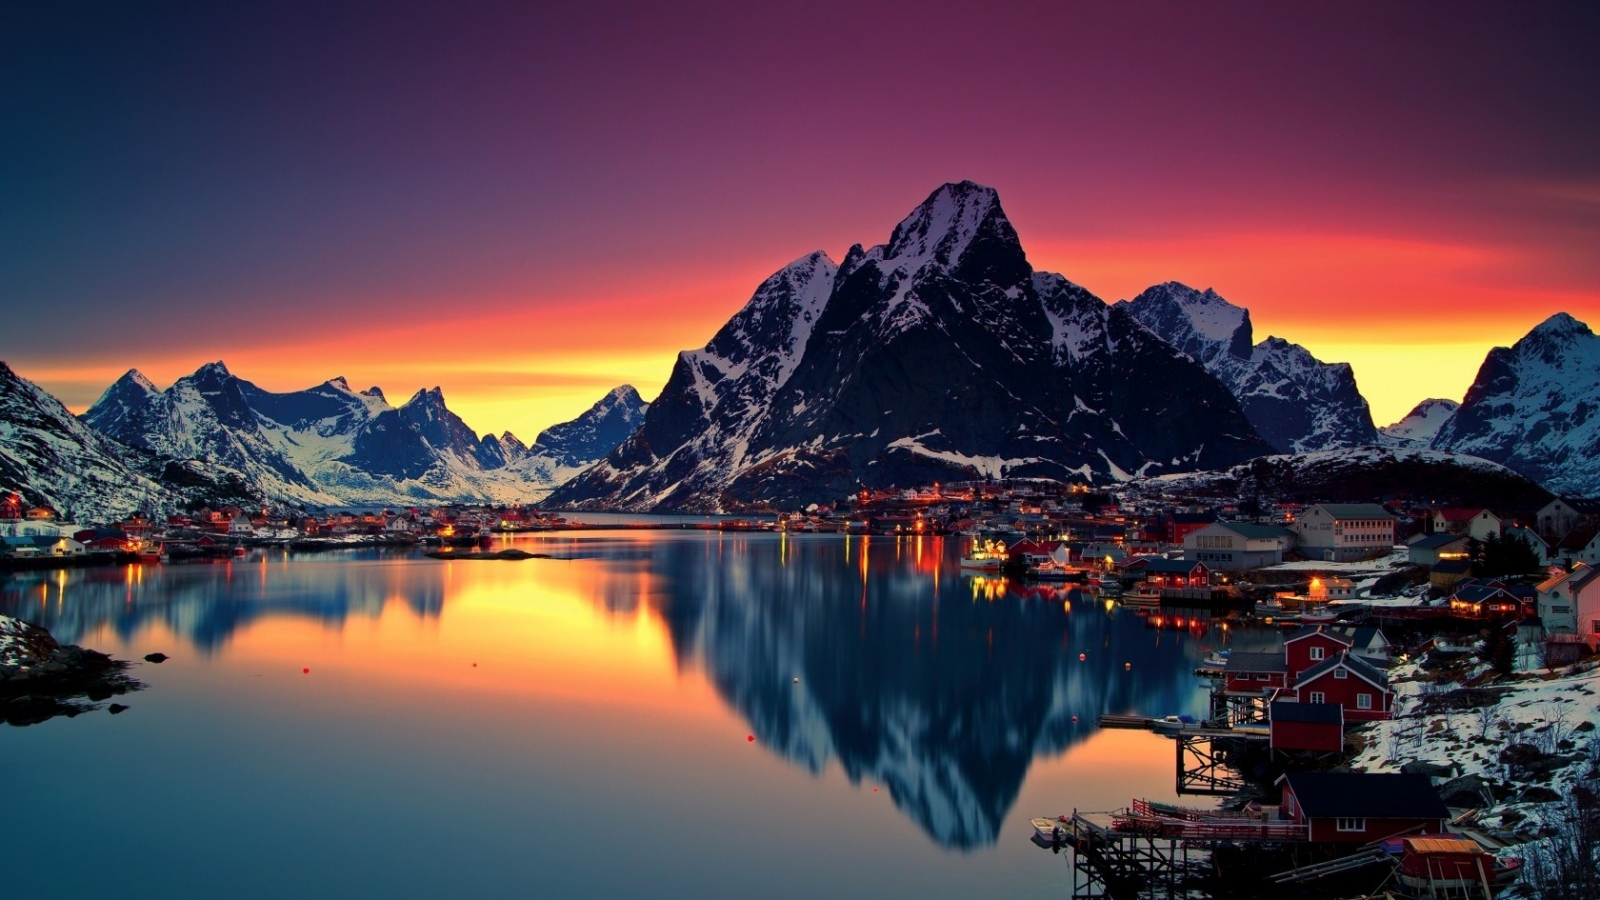 Night Lofoten Islands Norway for 1600 x 900 HDTV resolution